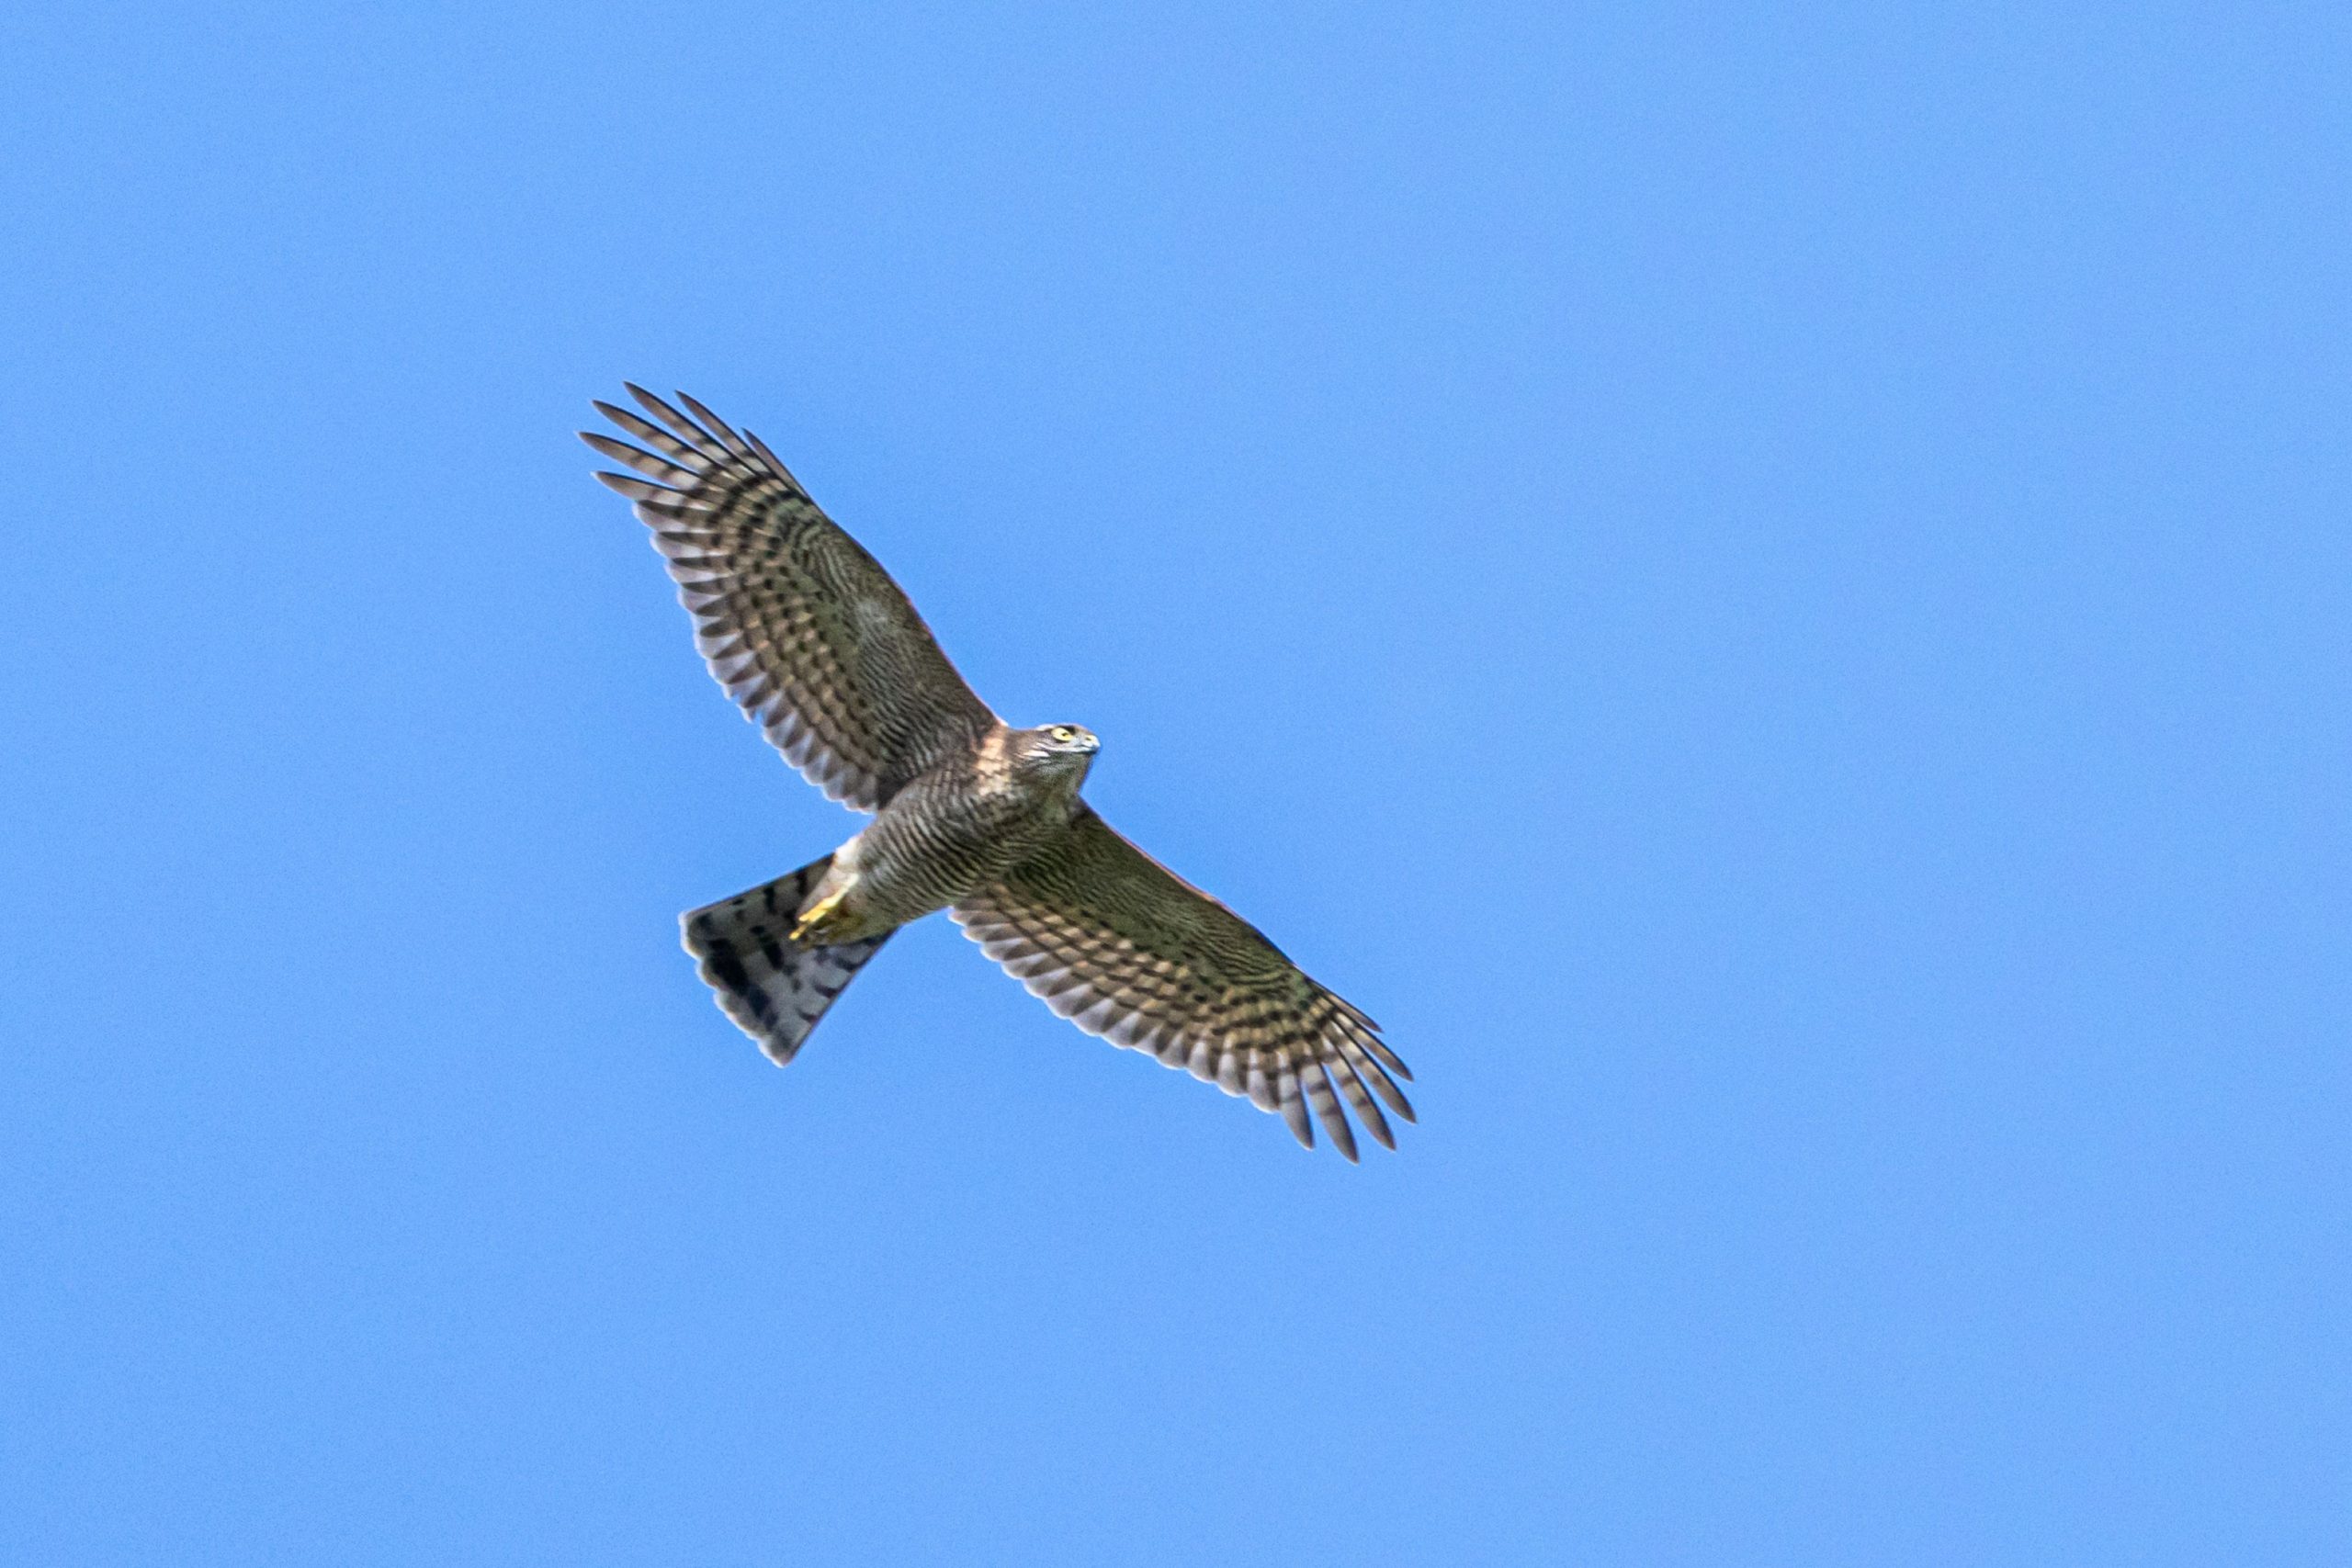 A Sparrow Hawk flies in a blue sky in Dublin, Ireland